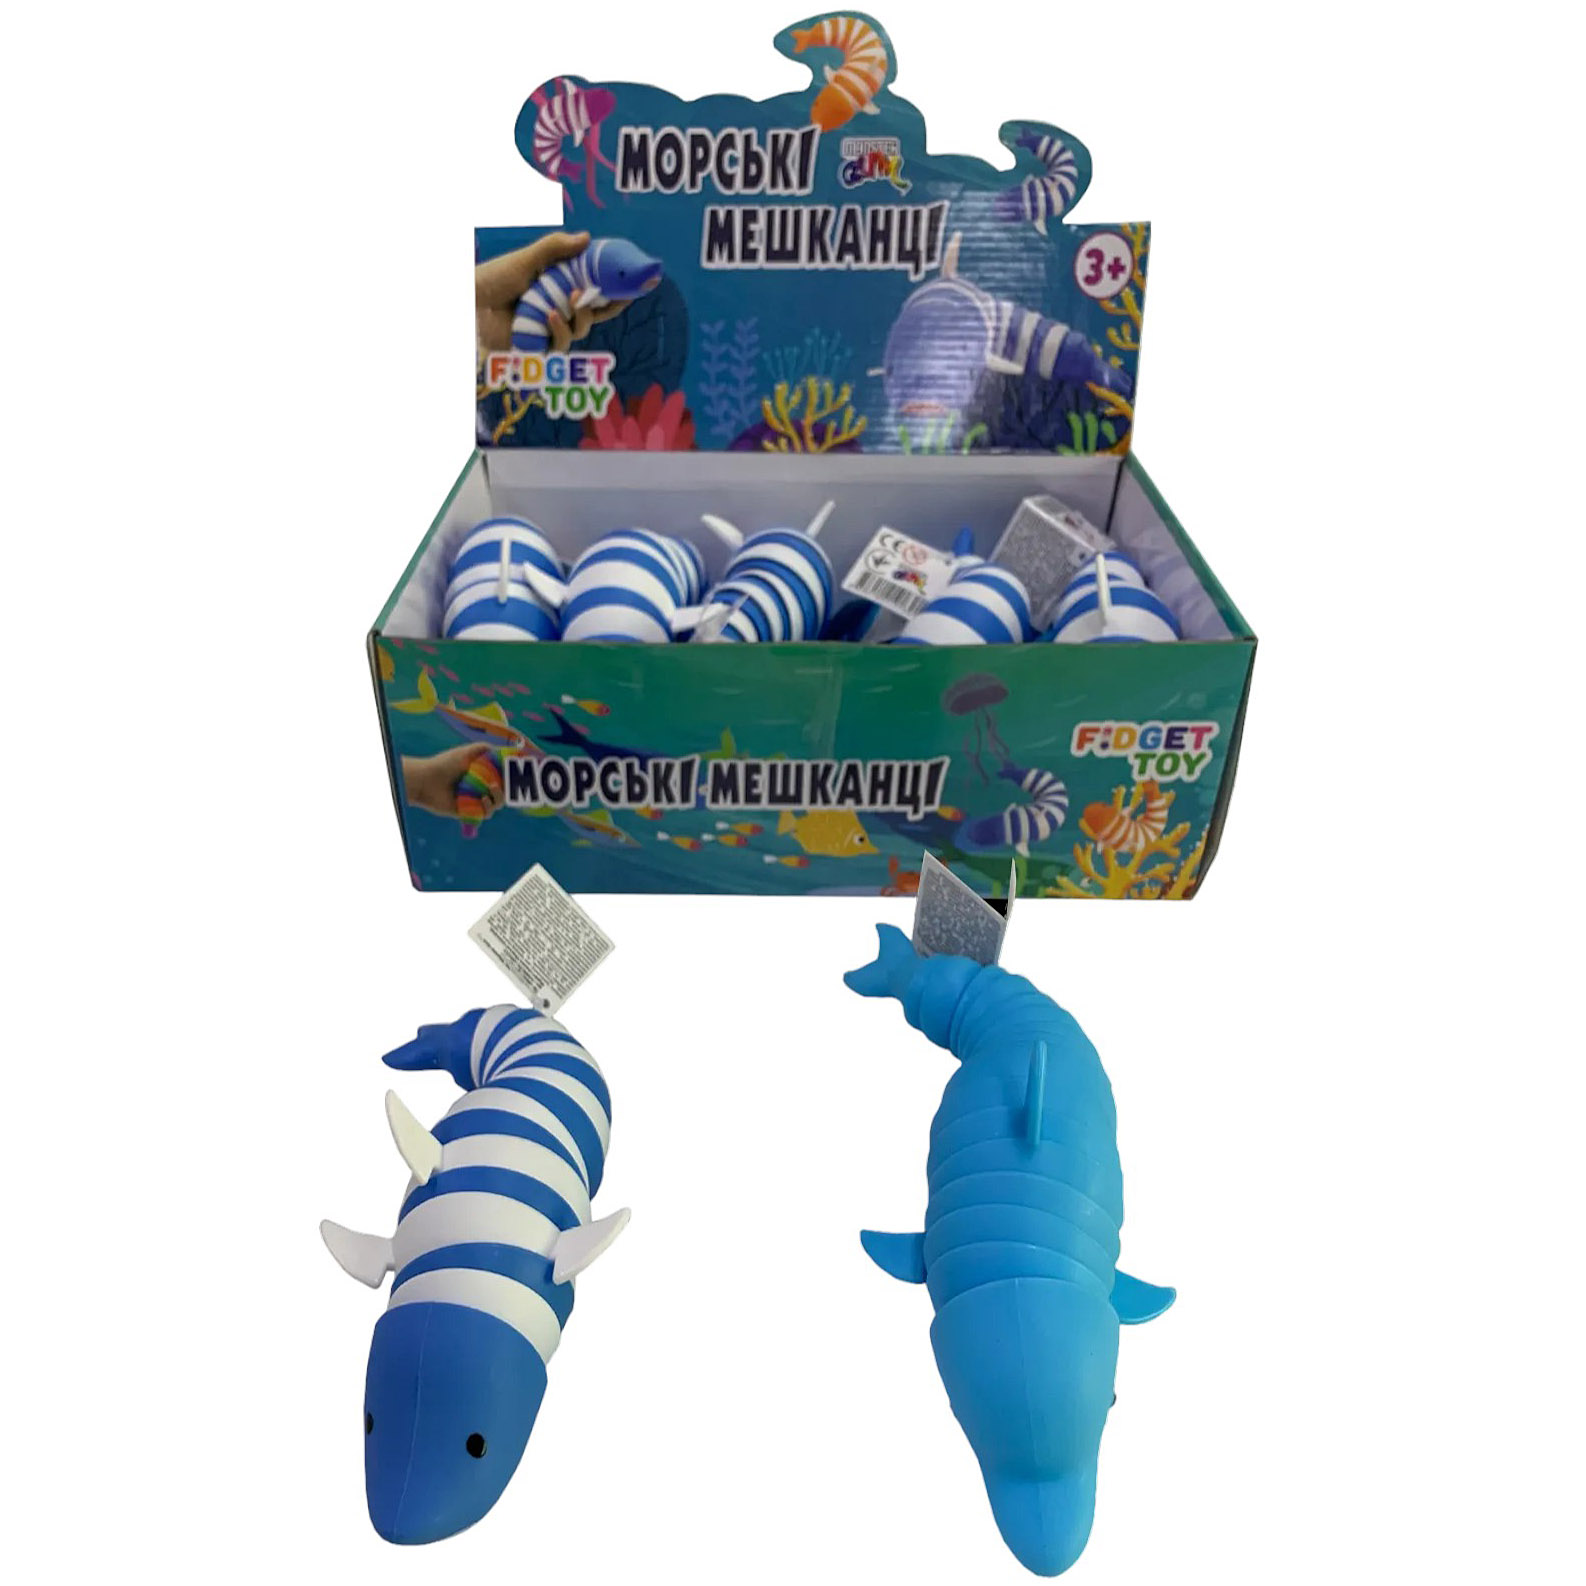 Фіджет-іграшка Monster Gum Морські мешканці в асортименті (CH2696/DS-1001213) - фото 1